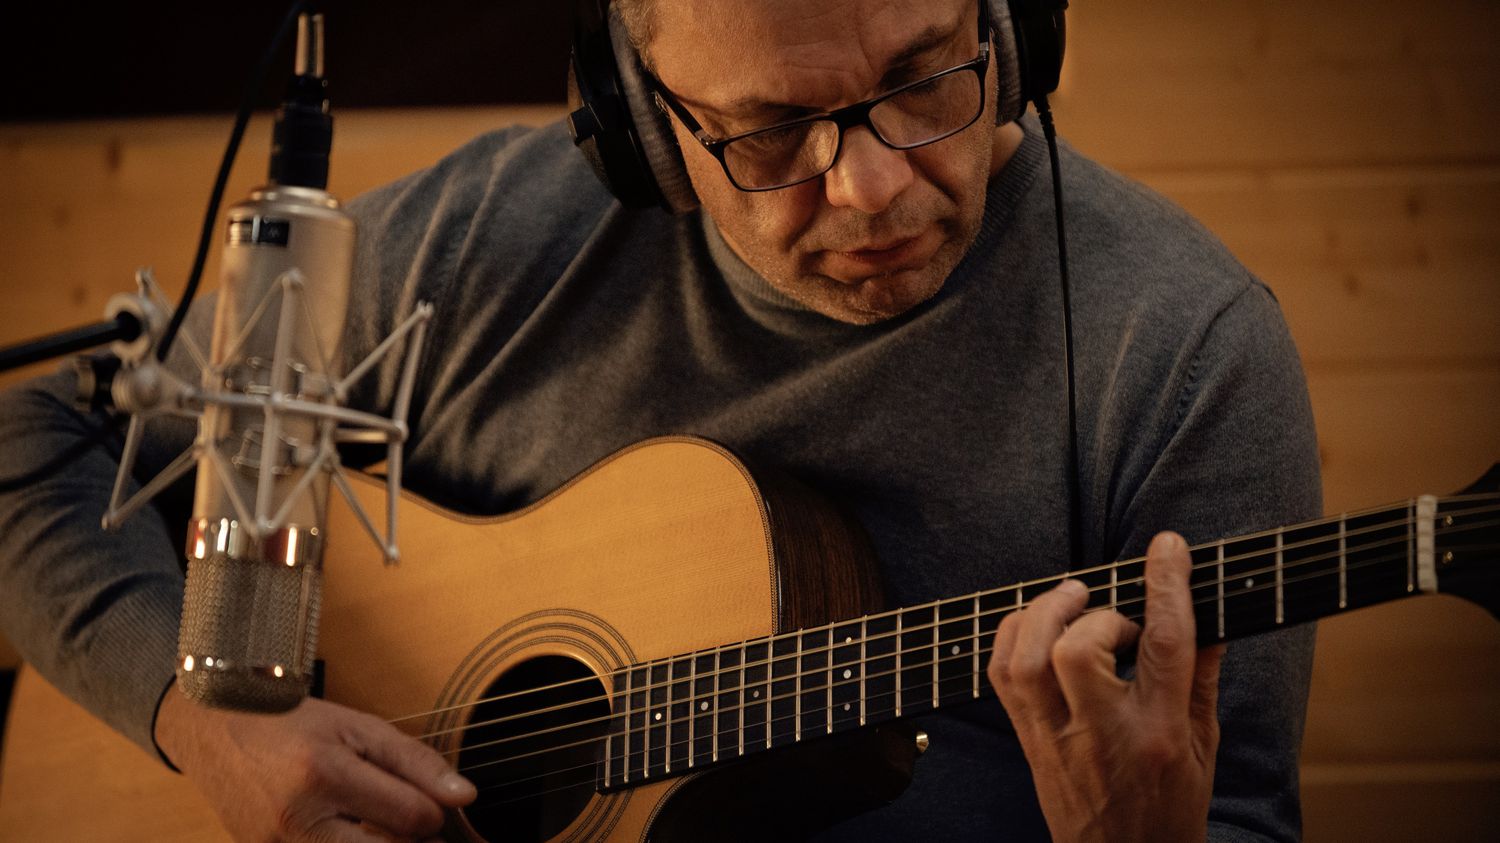 Biréli Lagrène alone with his guitar on his new album "Solo suites"